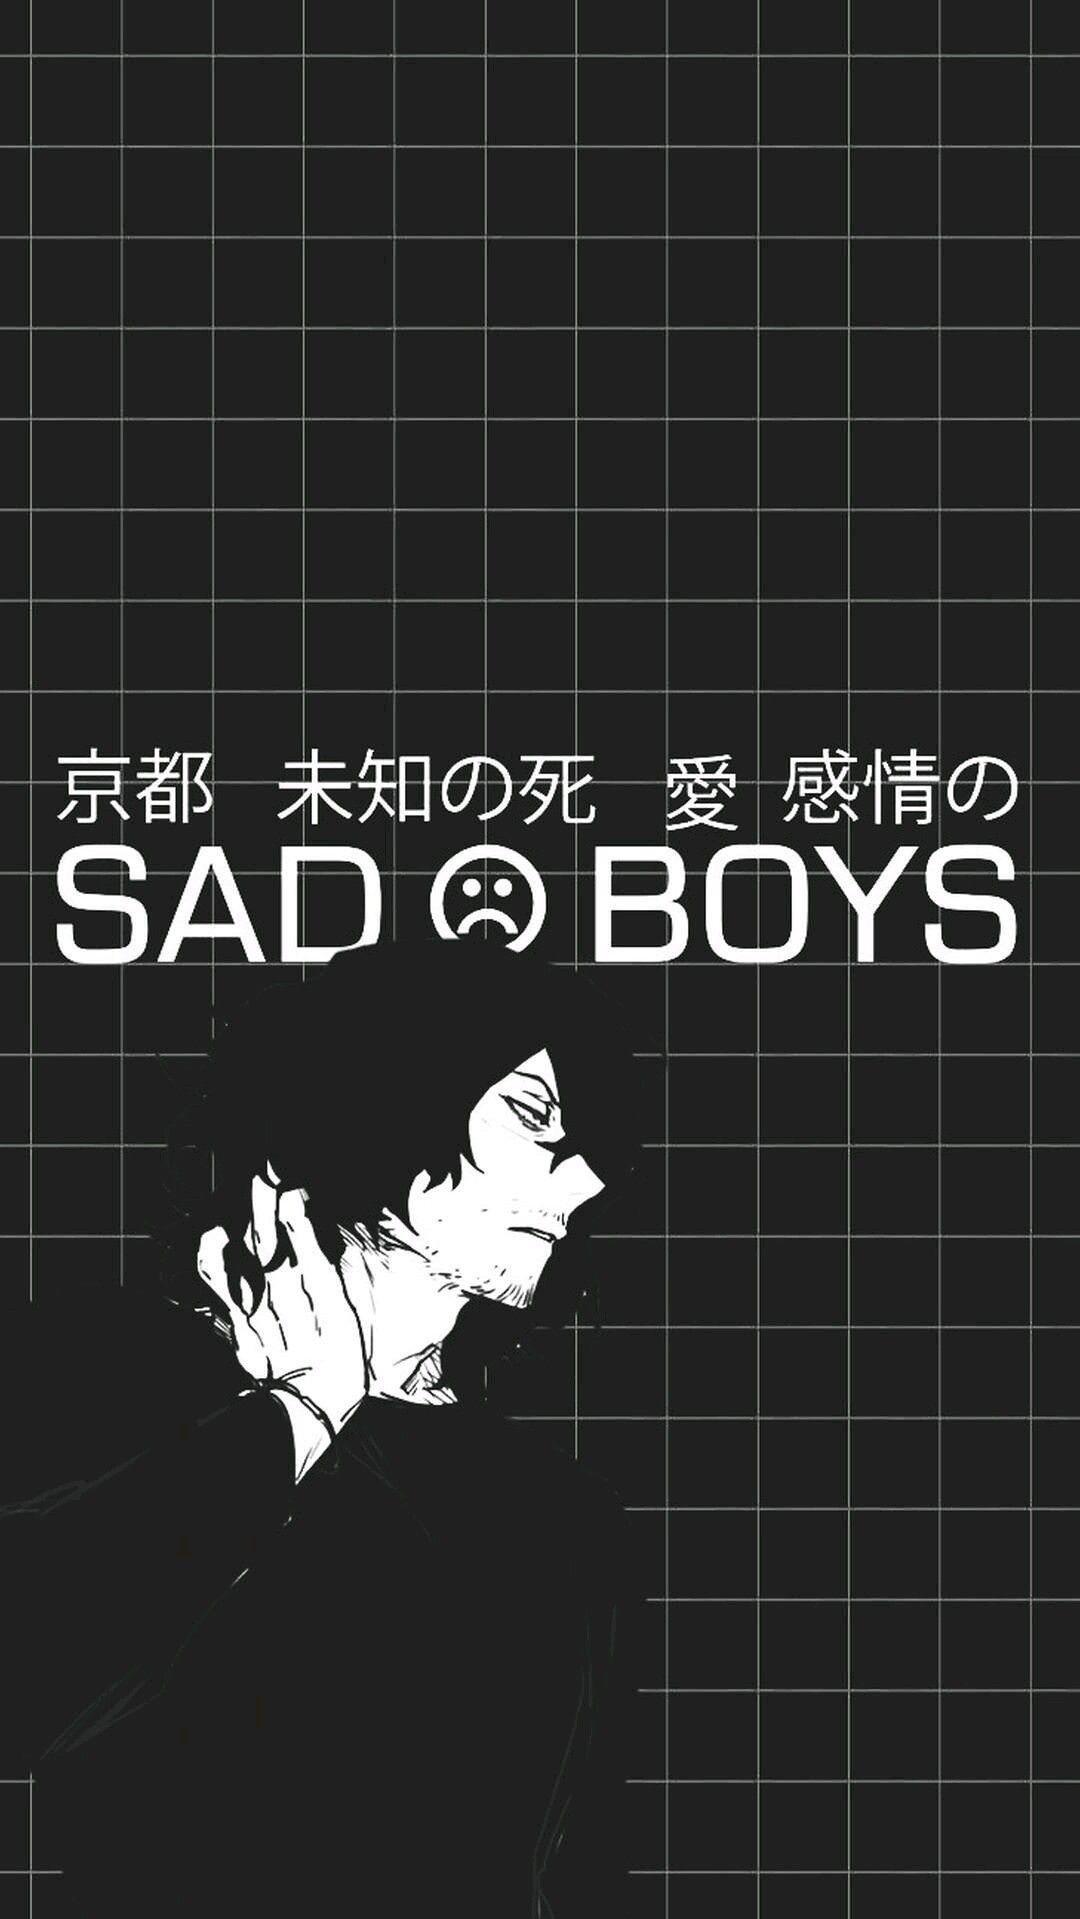 Dark Anime Aesthetic Sad Boys Wallpaper Mobcup